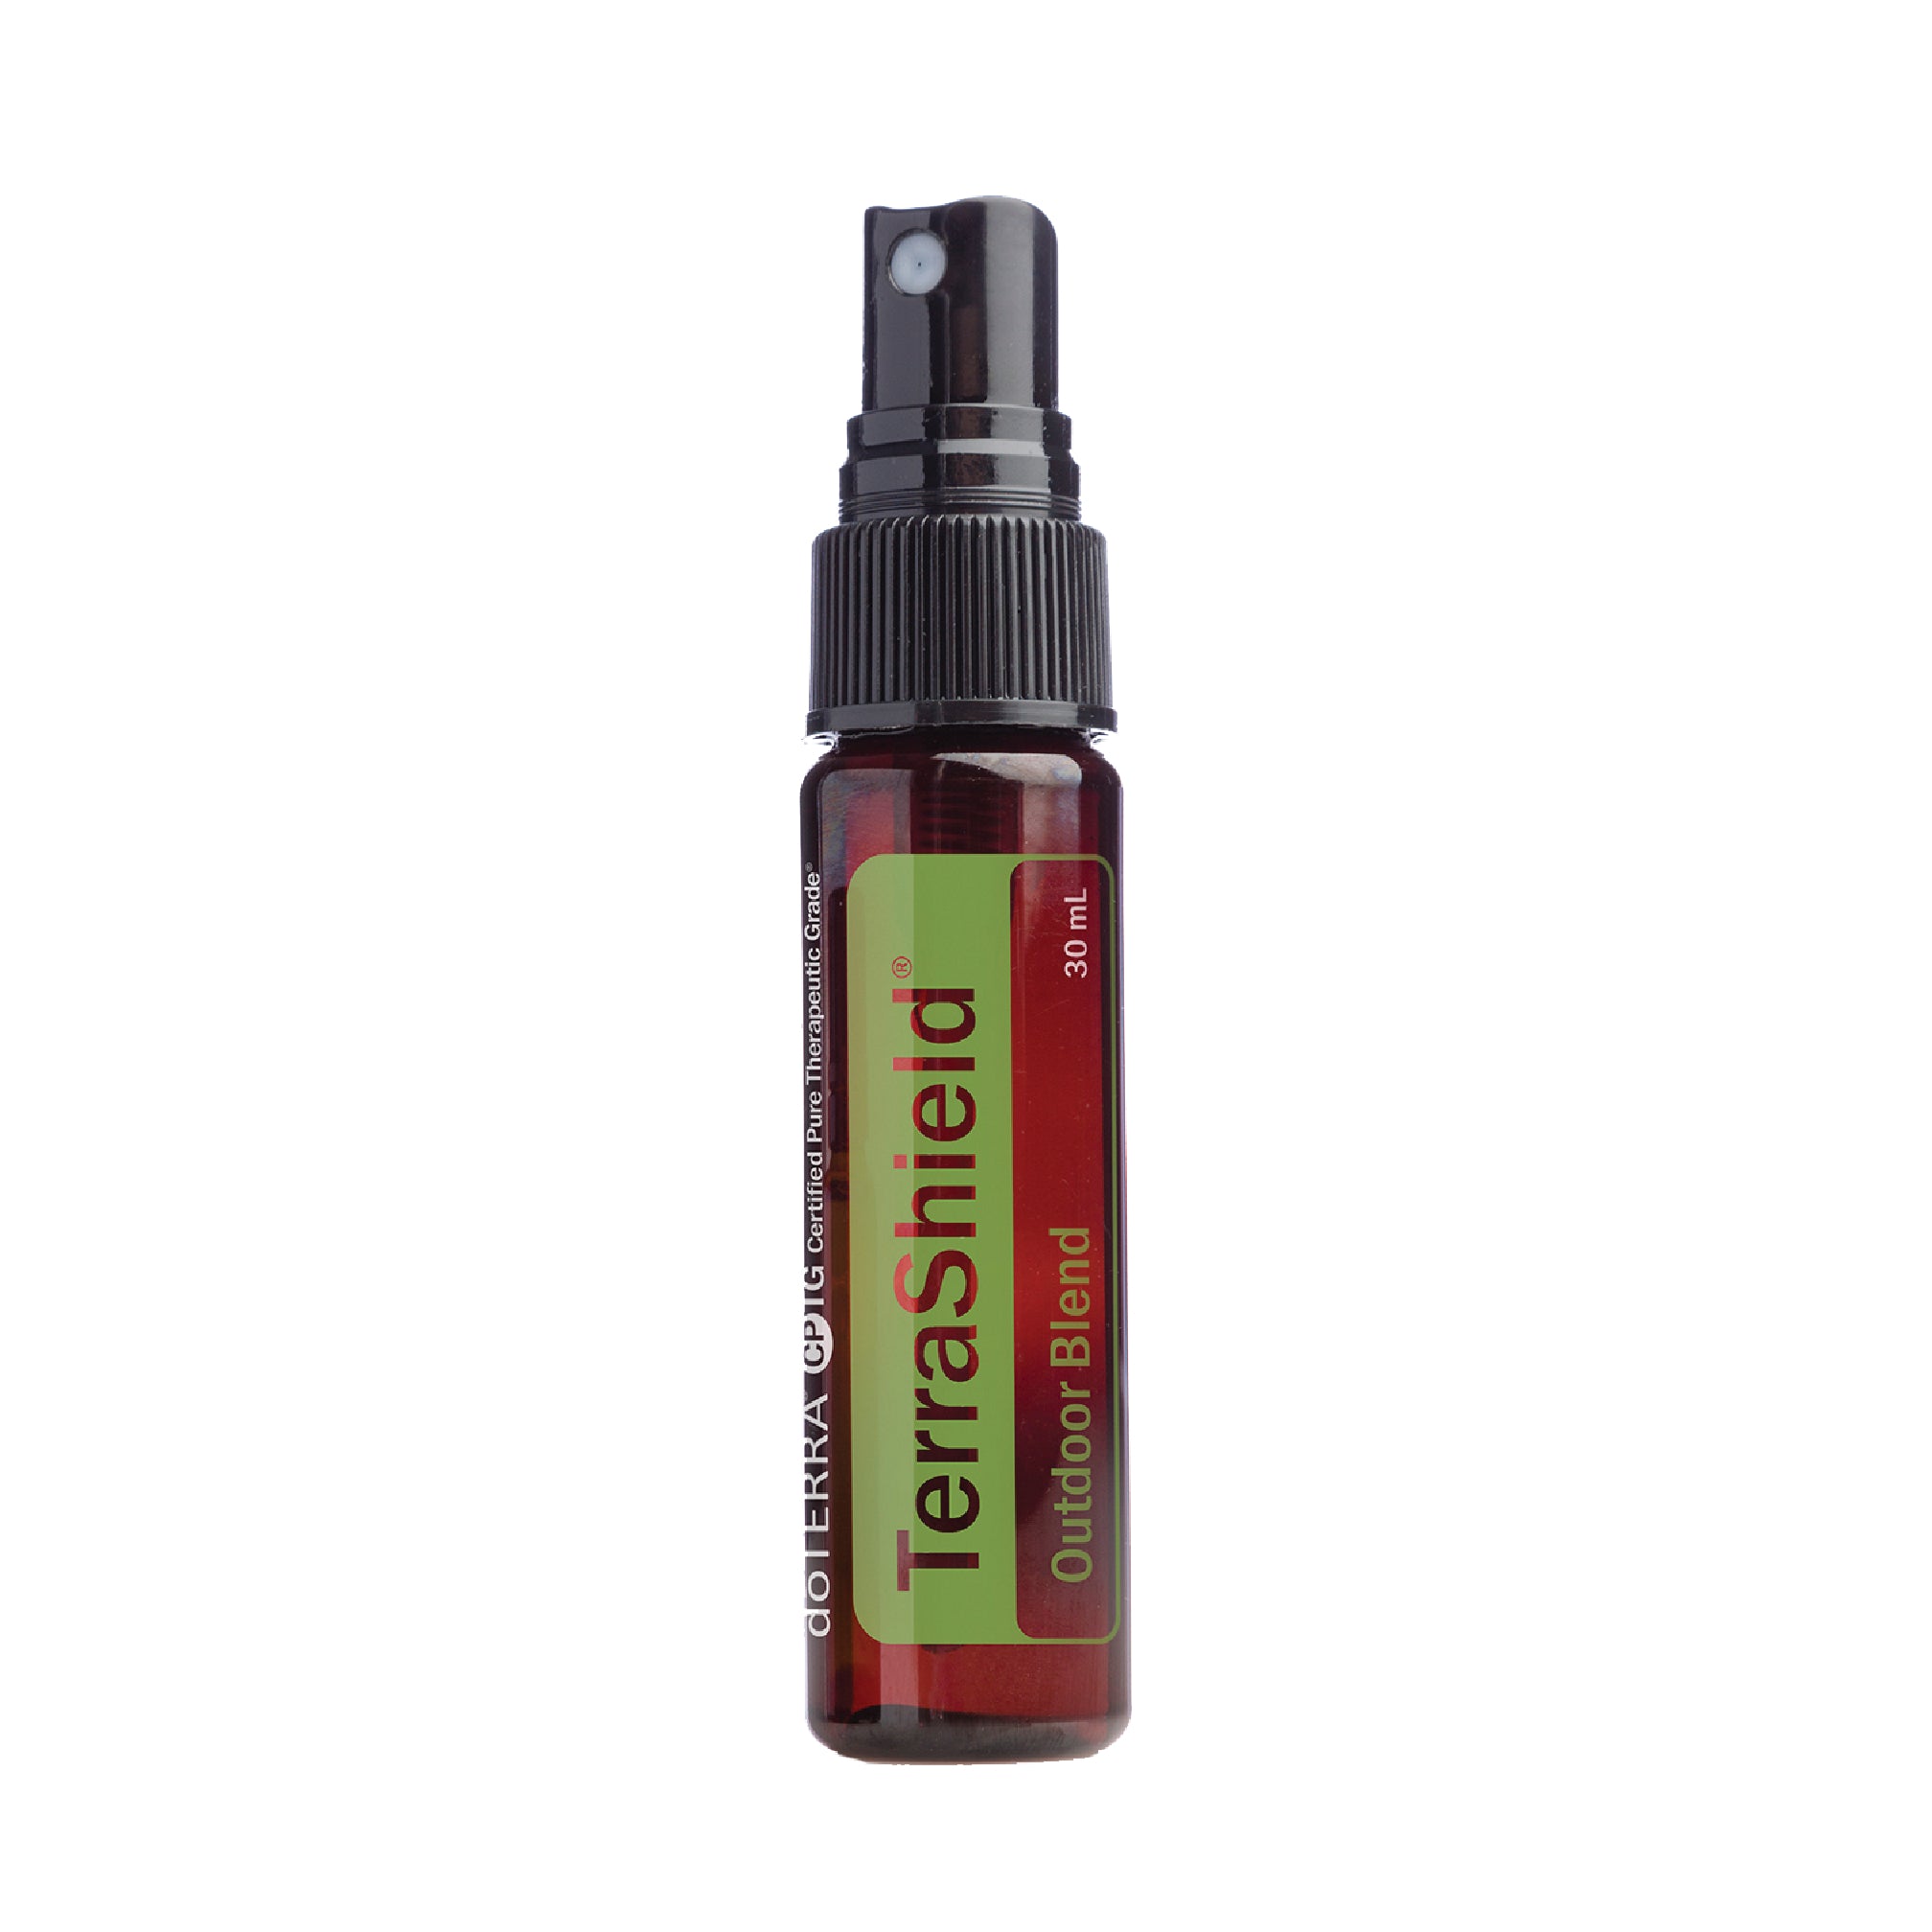 TerraShield® Essential Oil Blend Spray